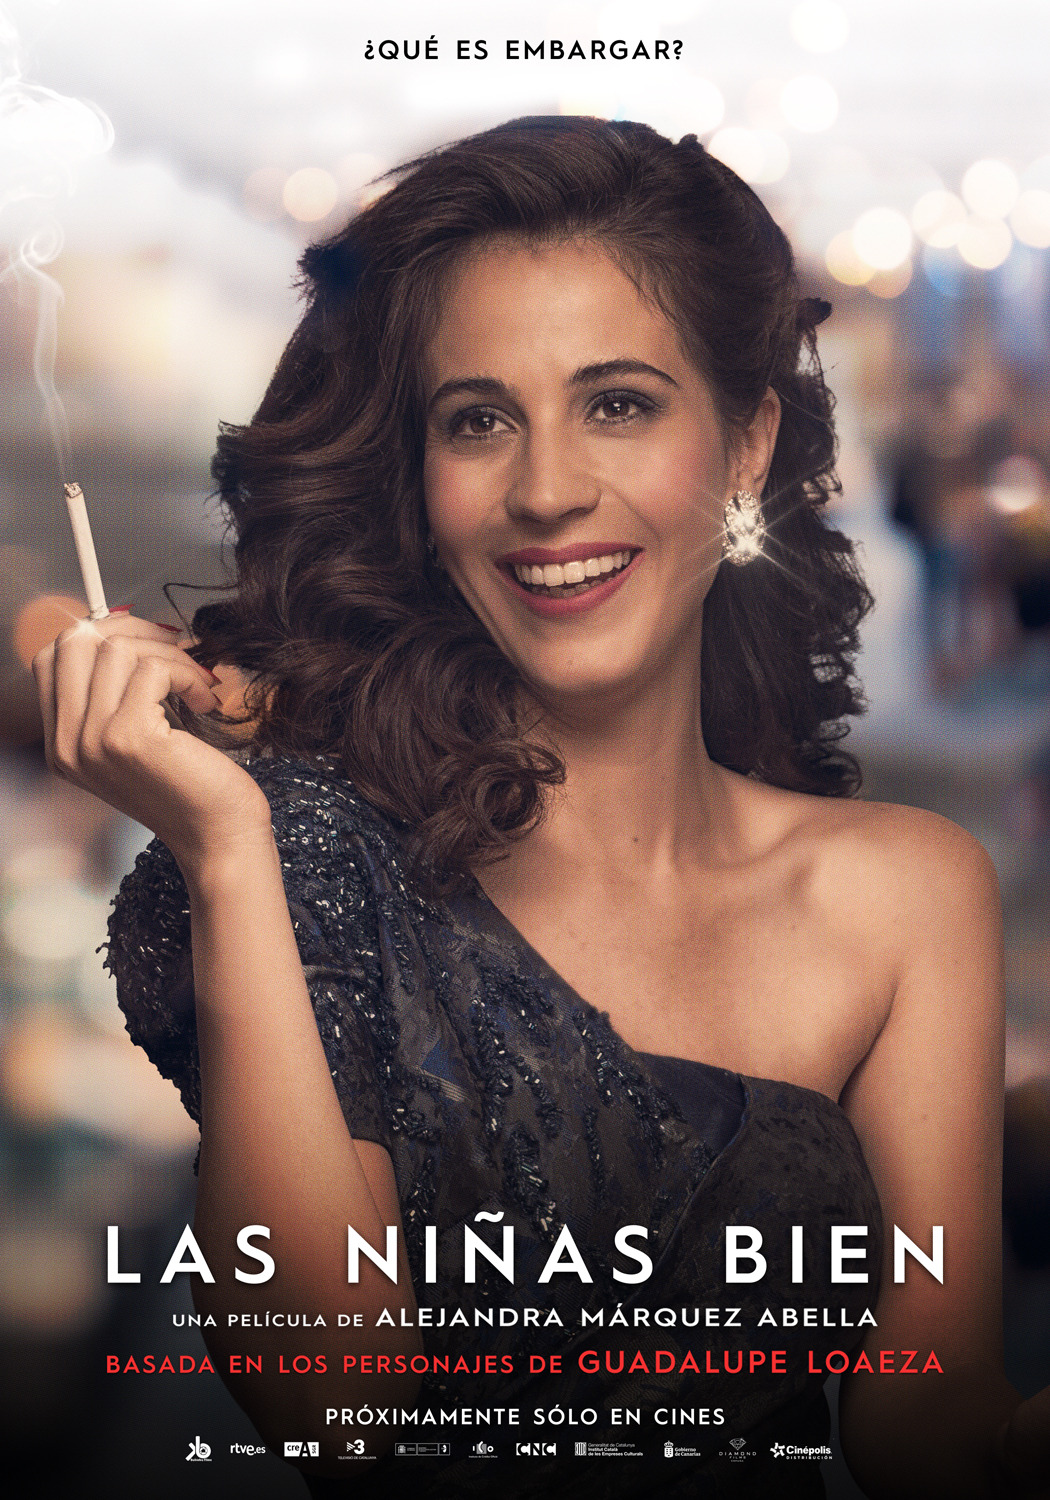 Extra Large Movie Poster Image for Las niñas bien (#5 of 16)